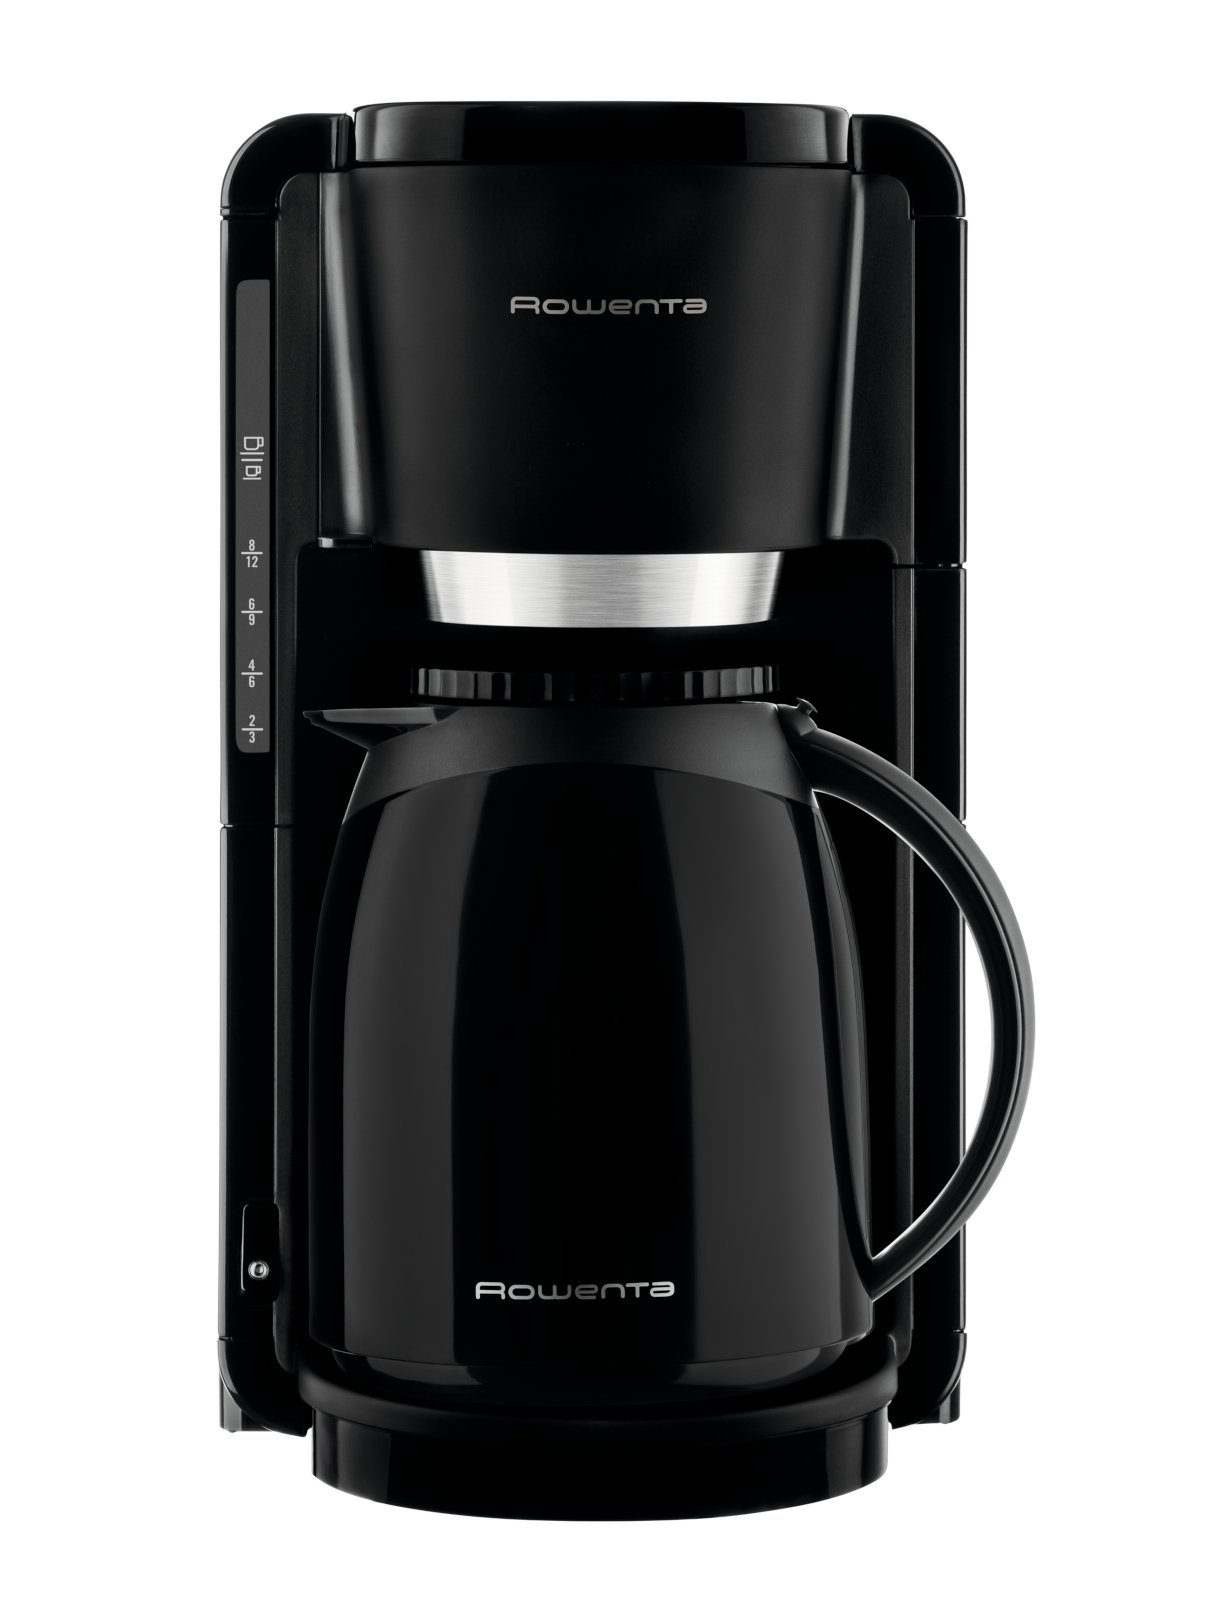 Filterkaffeemaschine mit schwarz, Kaffee CT3808 Thermokanne Thermo-Kaffeemaschine Rowenta